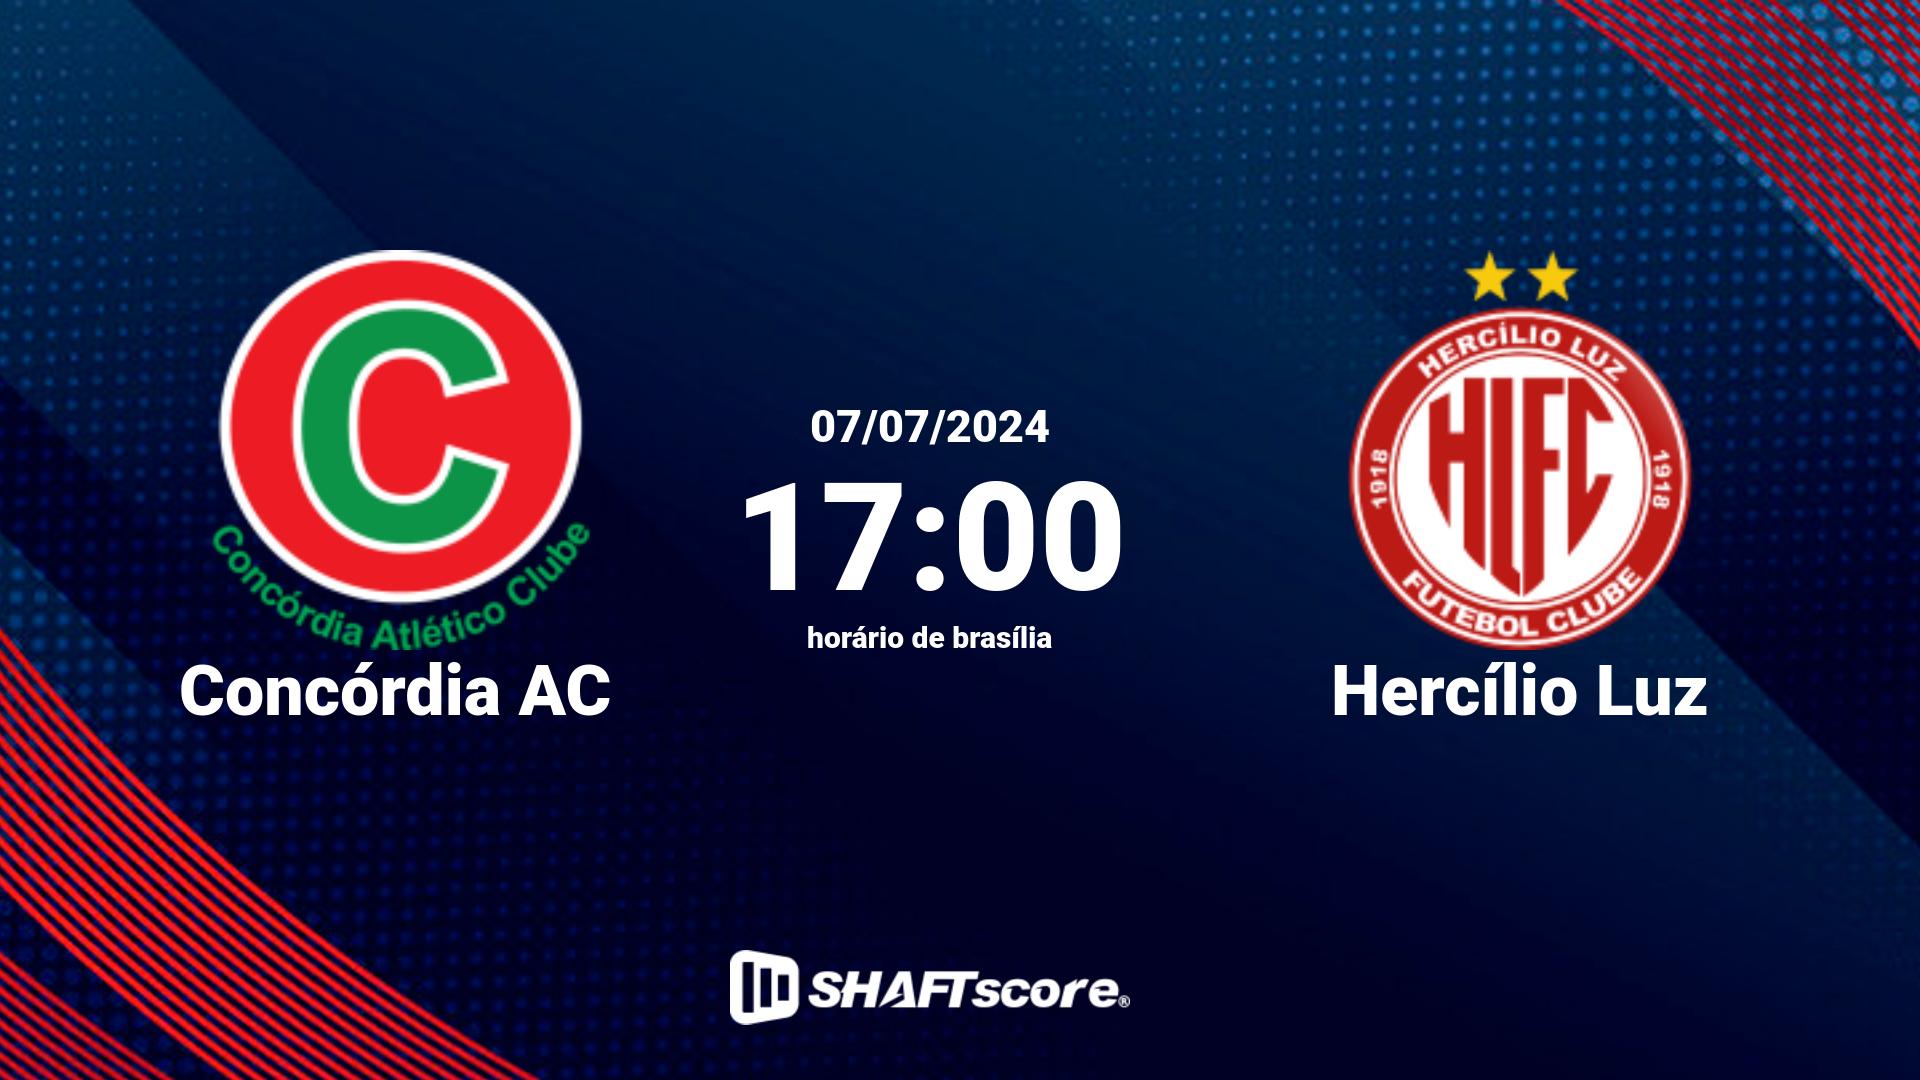 Estatísticas do jogo Concórdia AC vs Hercílio Luz 07.07 17:00